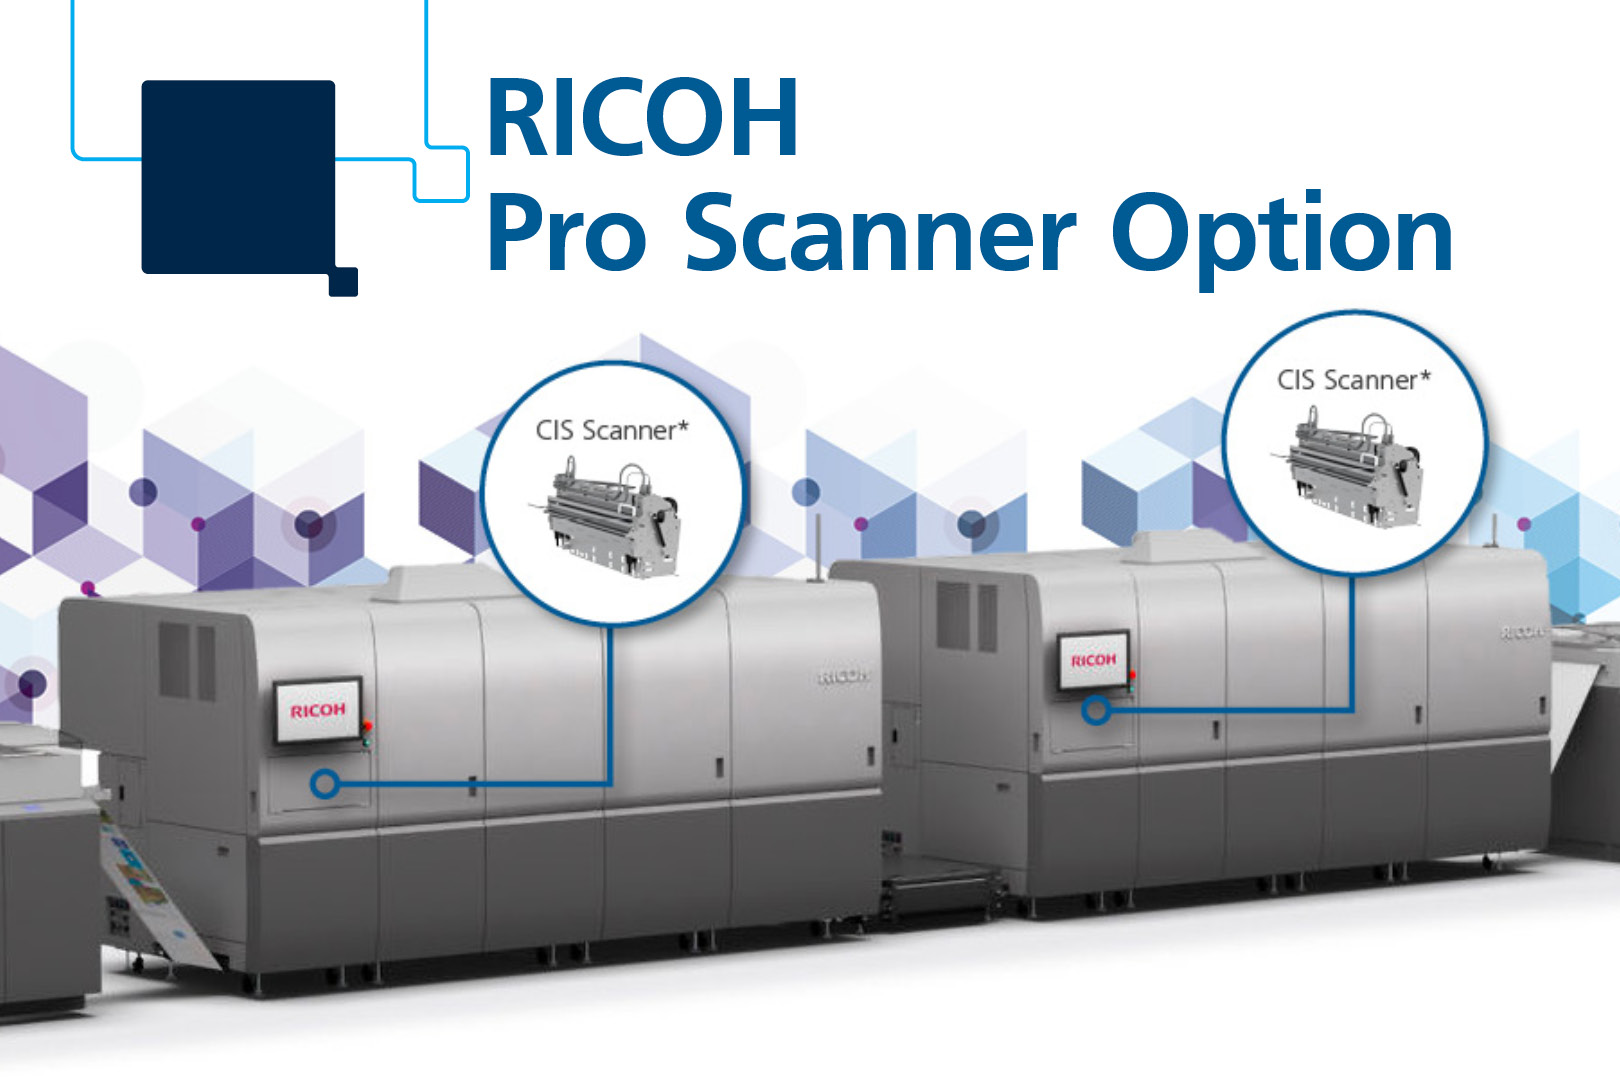 The RICOH Pro Scanner Option for the  RICOH Pro VC70000 & RICOH Pro VC60000, Ricoh USA